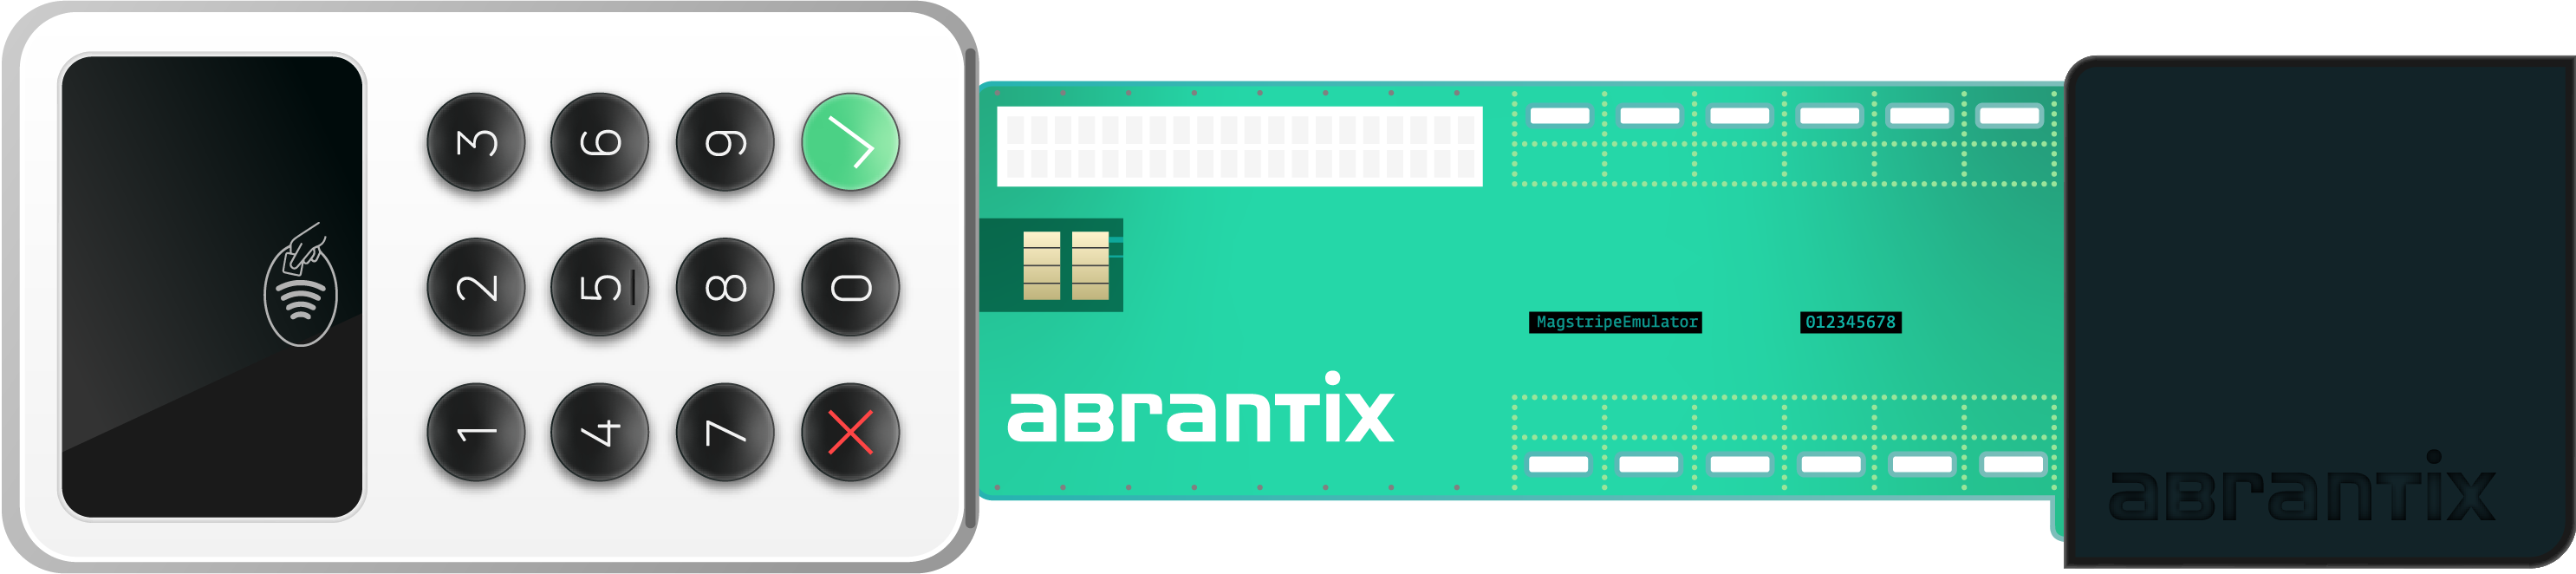 Abrantix Payment Software Terminal Testing Card Mobile